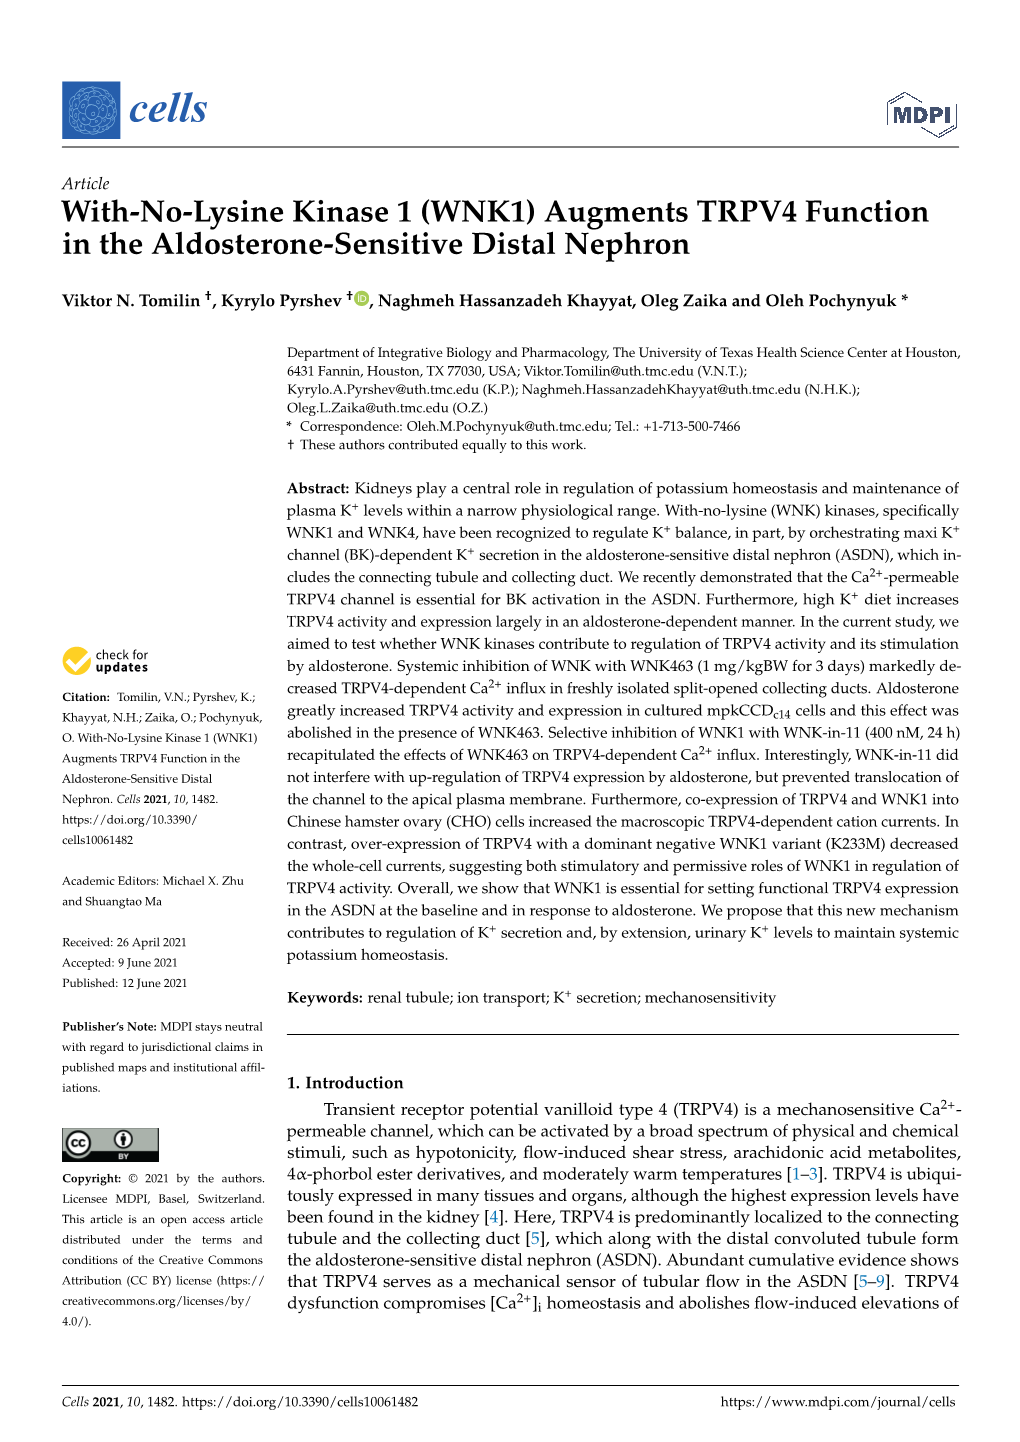 WNK1) Augments TRPV4 Function in the Aldosterone-Sensitive Distal Nephron